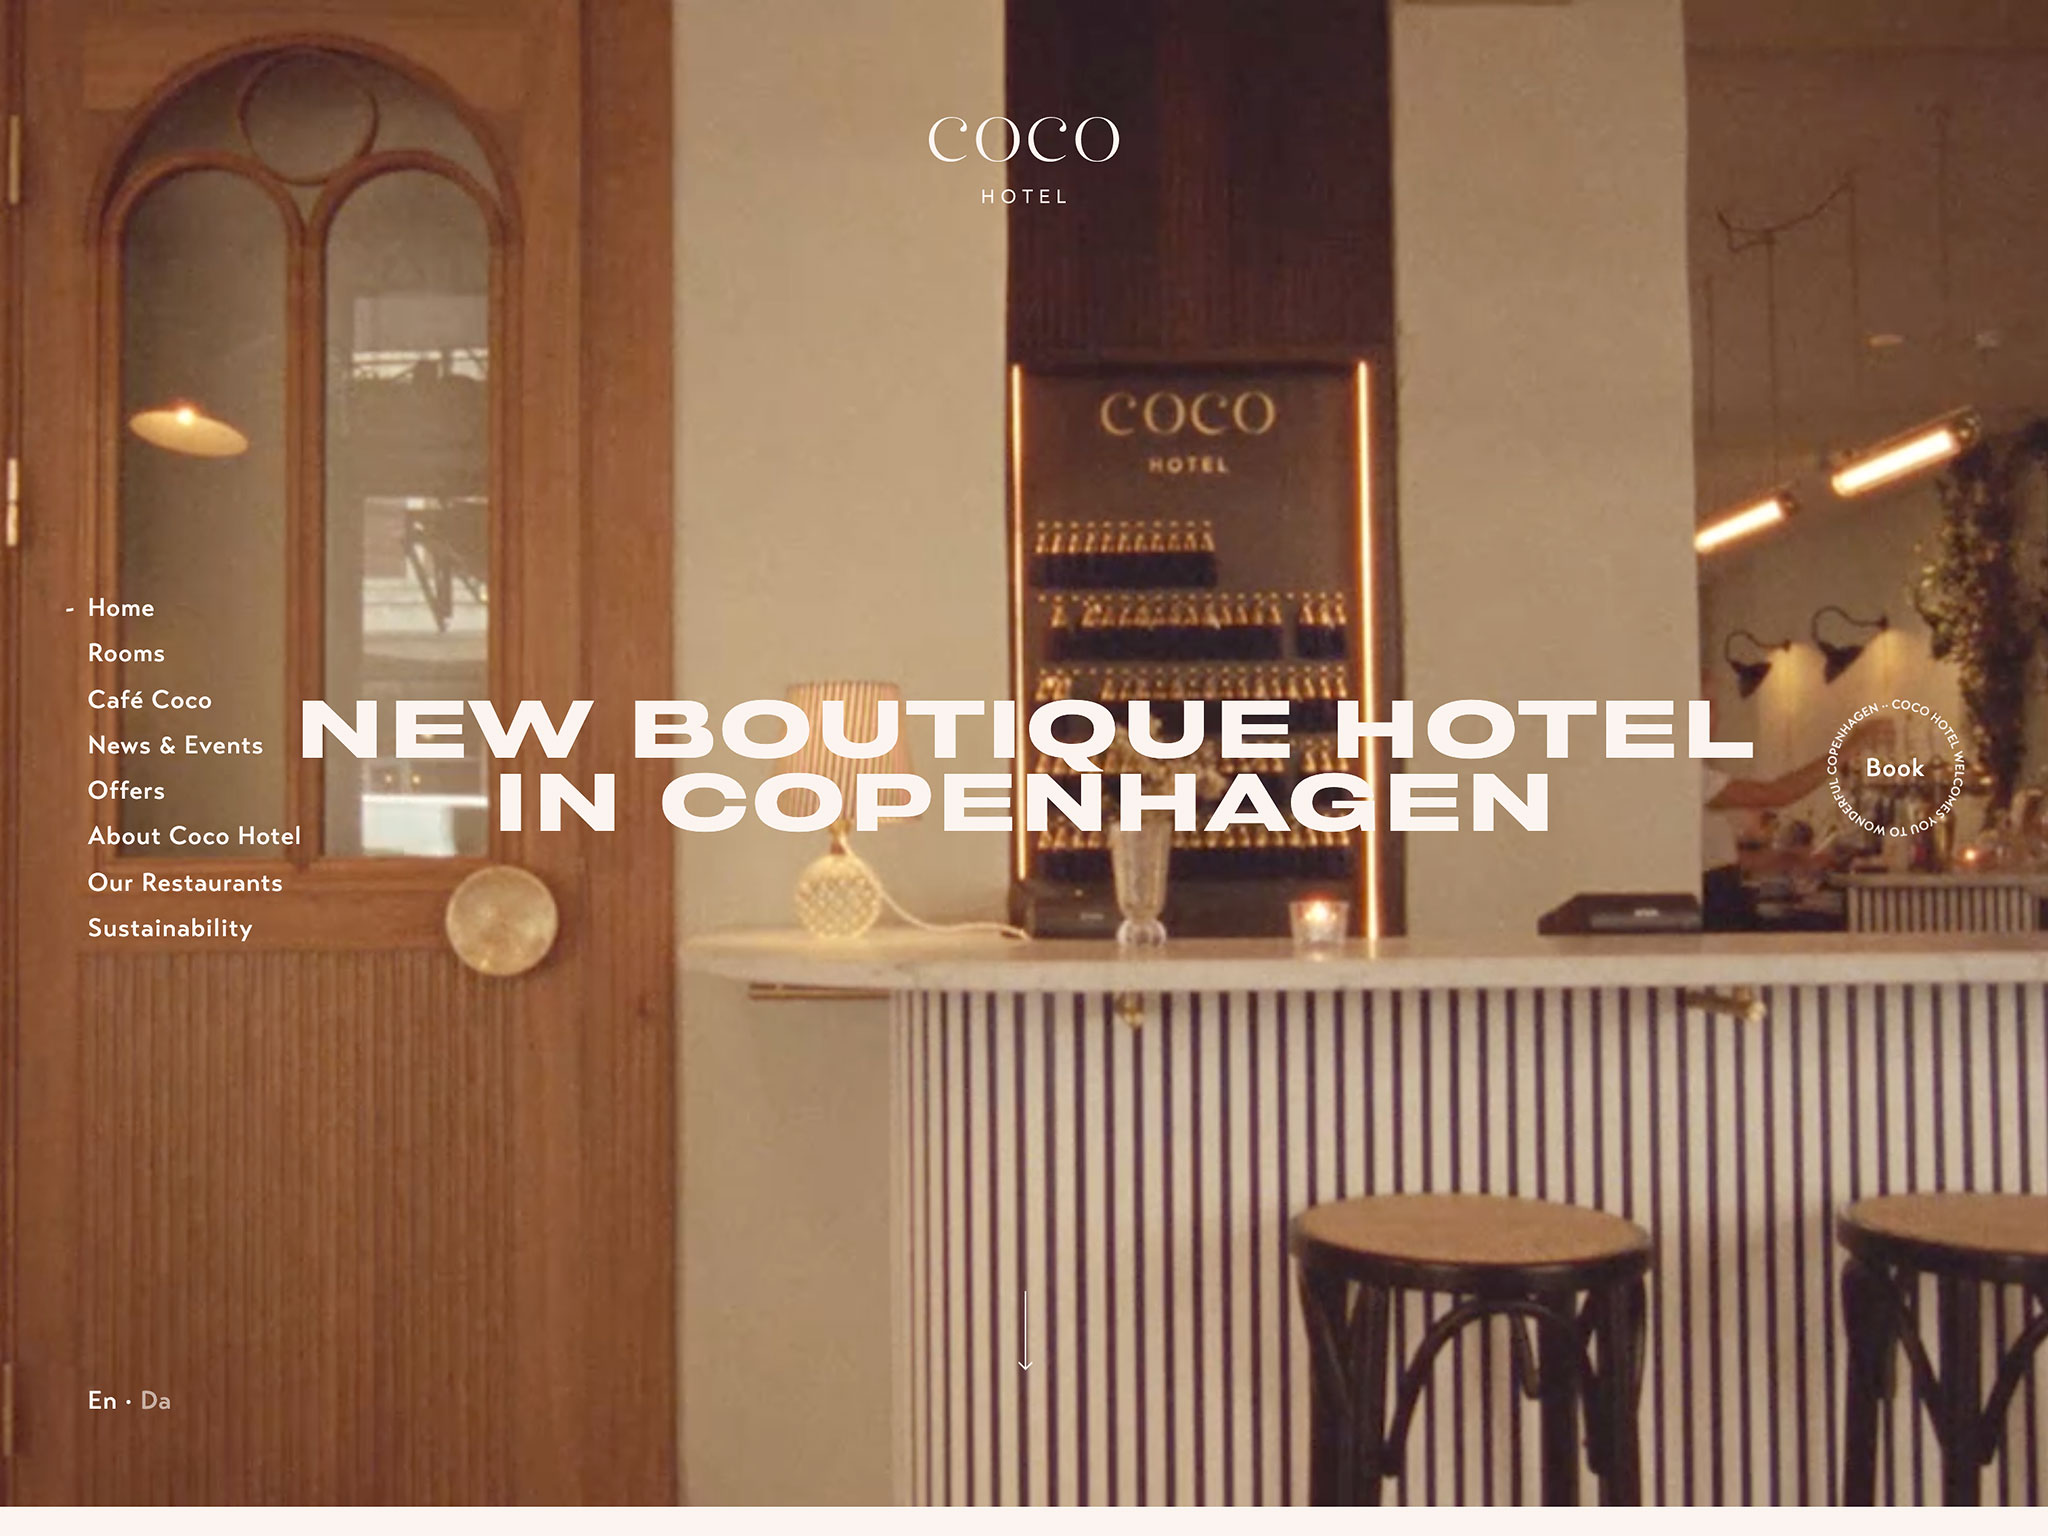 Cafe Coco – Enjoy fresh, organic coffee or a light meal in a chic getaway – Coco Hotel